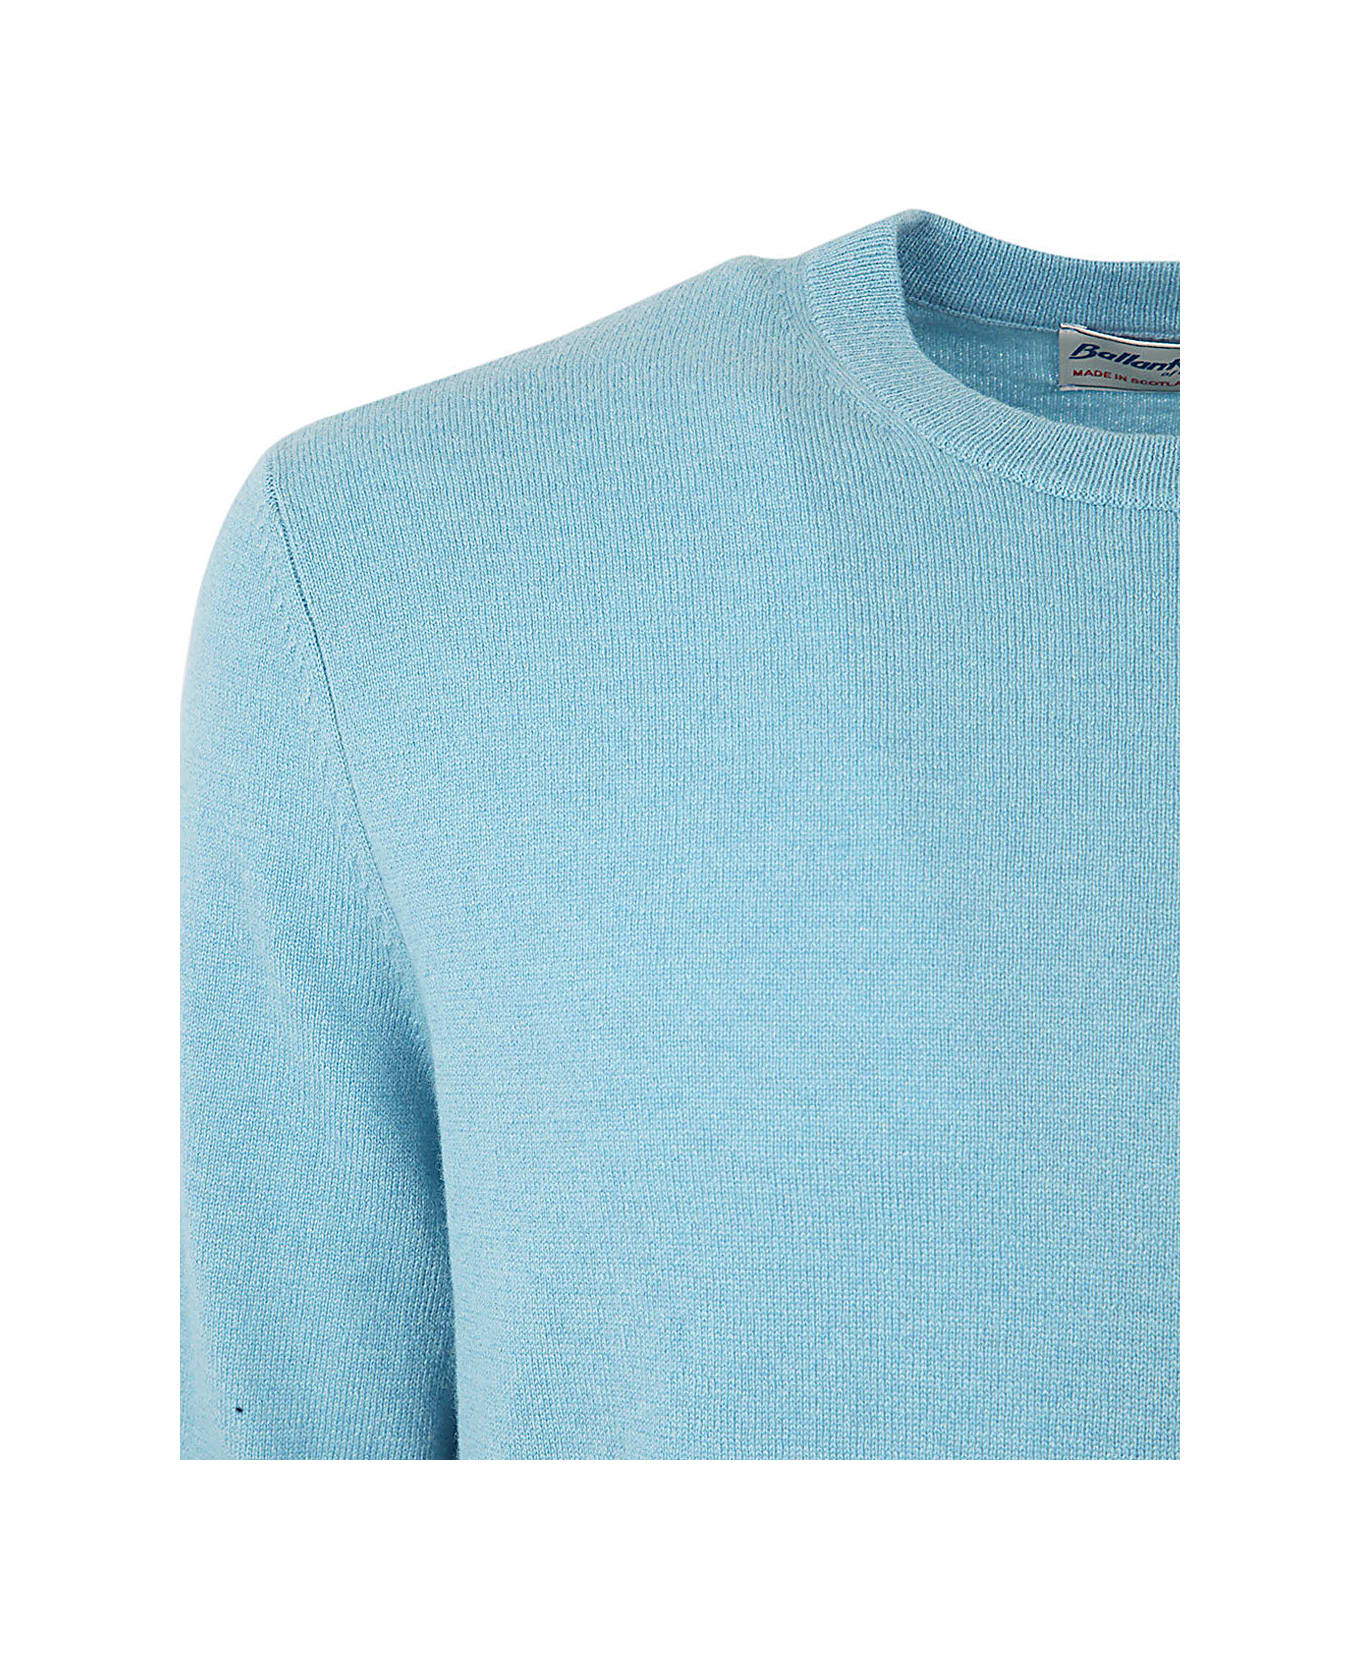 Ballantyne Cashmere Round Neck Pullover - Light Blue